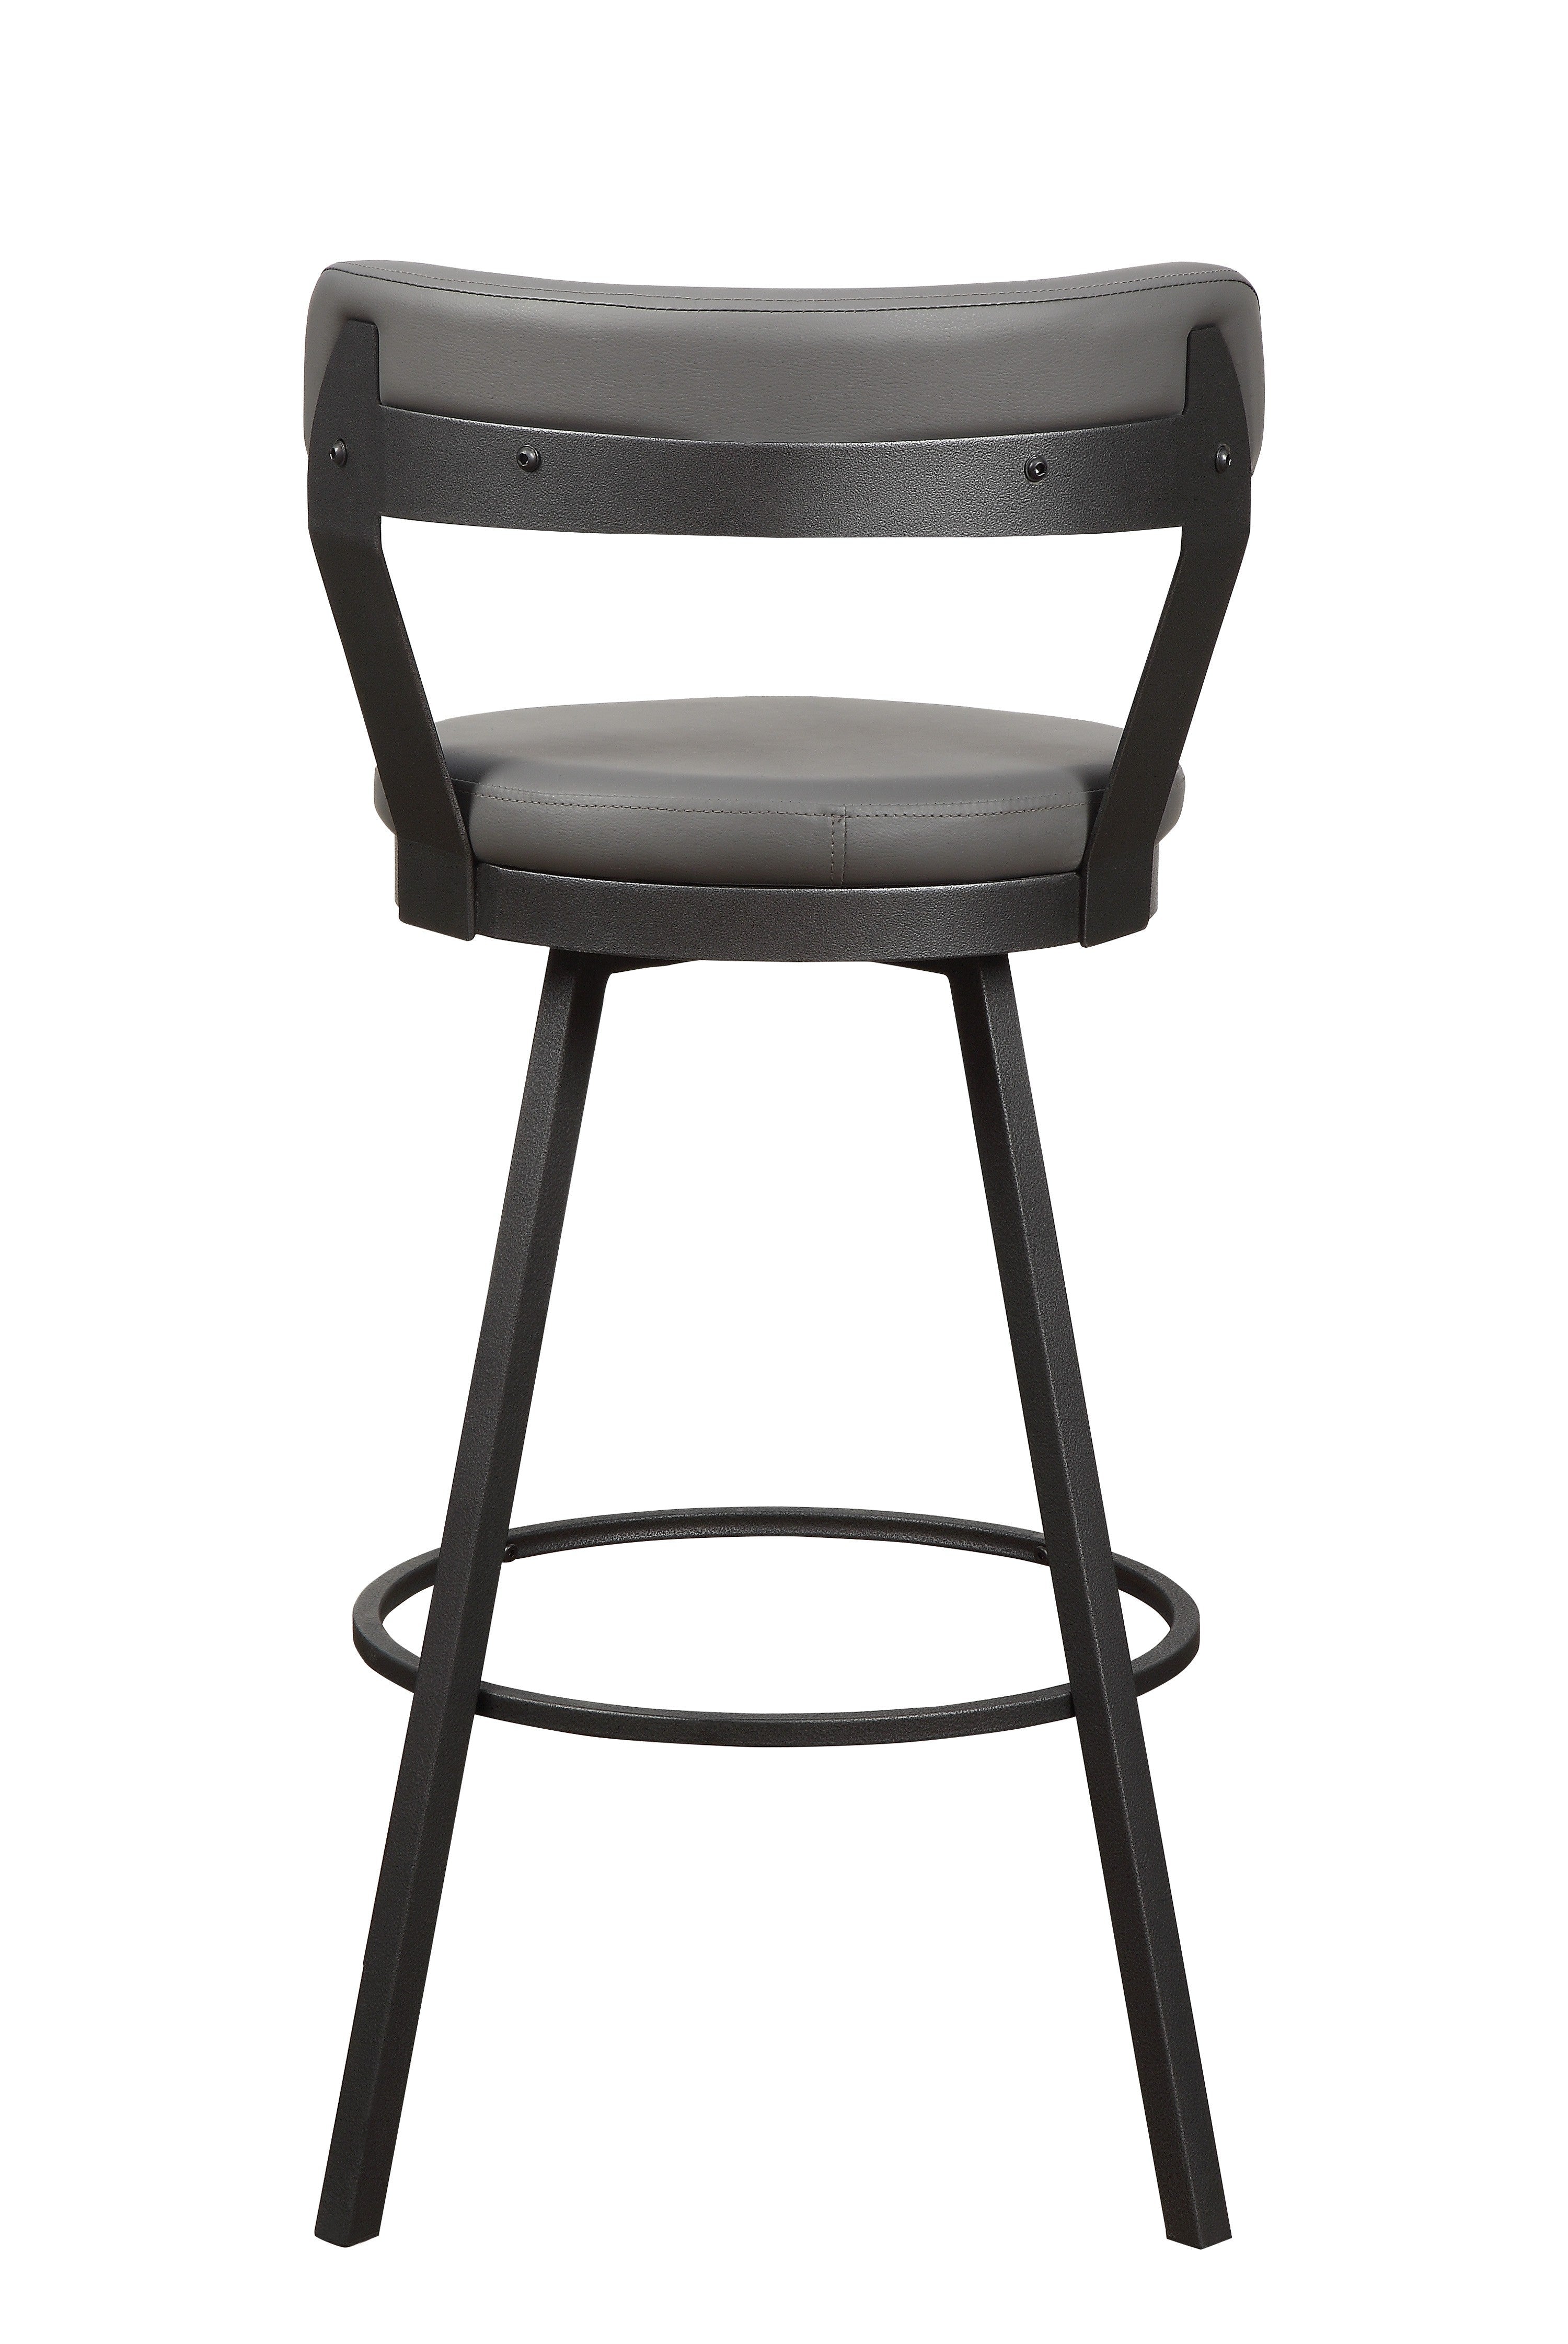 Appert Gray/Dark Gray Swivel Pub Height Chair, Set of 2 - 5566-29GY - Bien Home Furniture &amp; Electronics